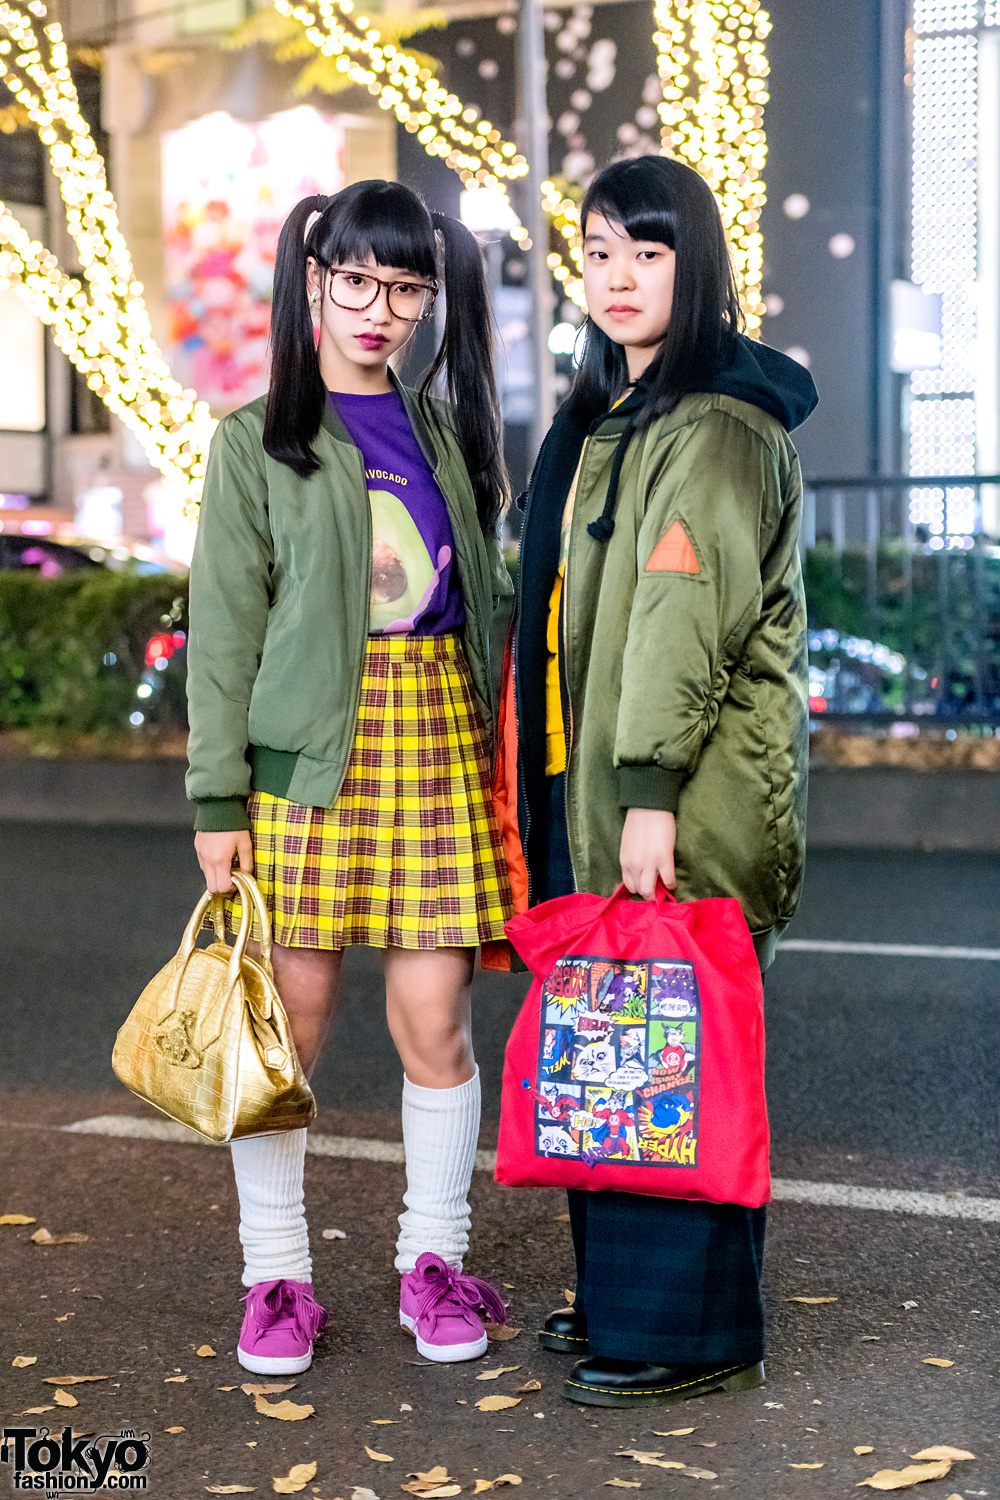 Harajuku Teens in Bomber Jackets & Plaid Fashion w/ Vivienne Westwood Bag & WC Japan